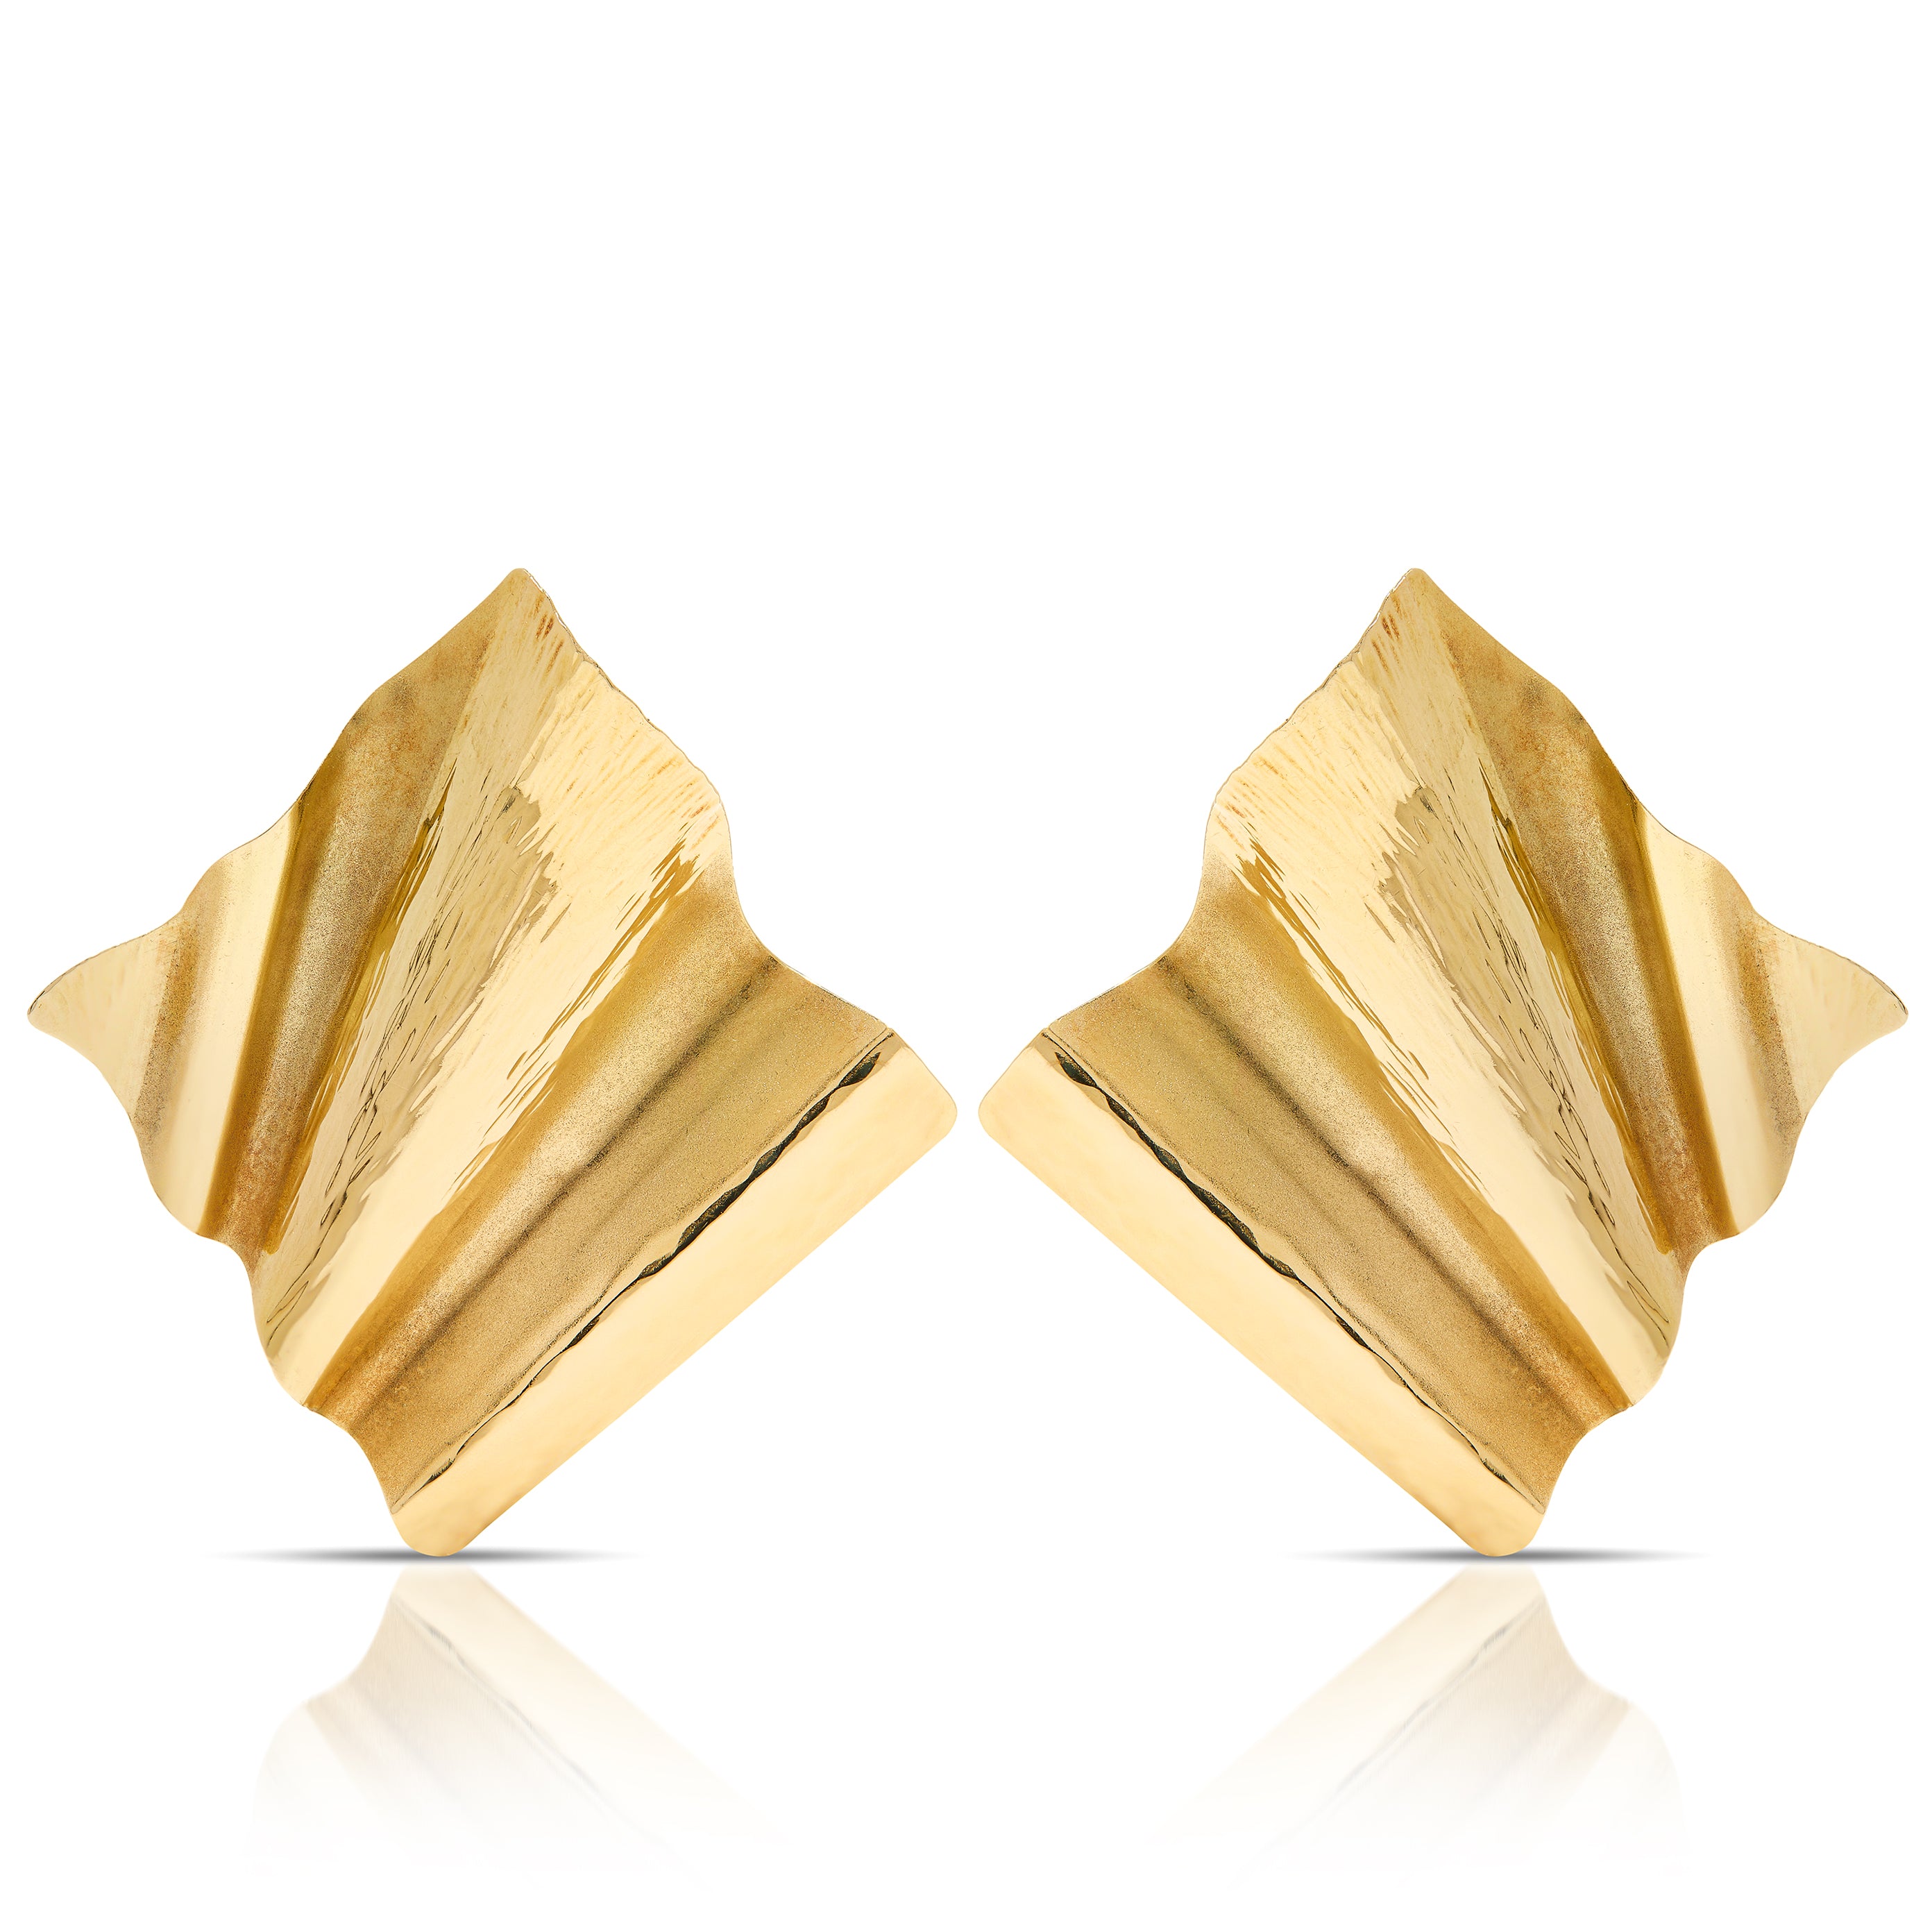 Vintage geometric earrings in flowing ribbon motif. 